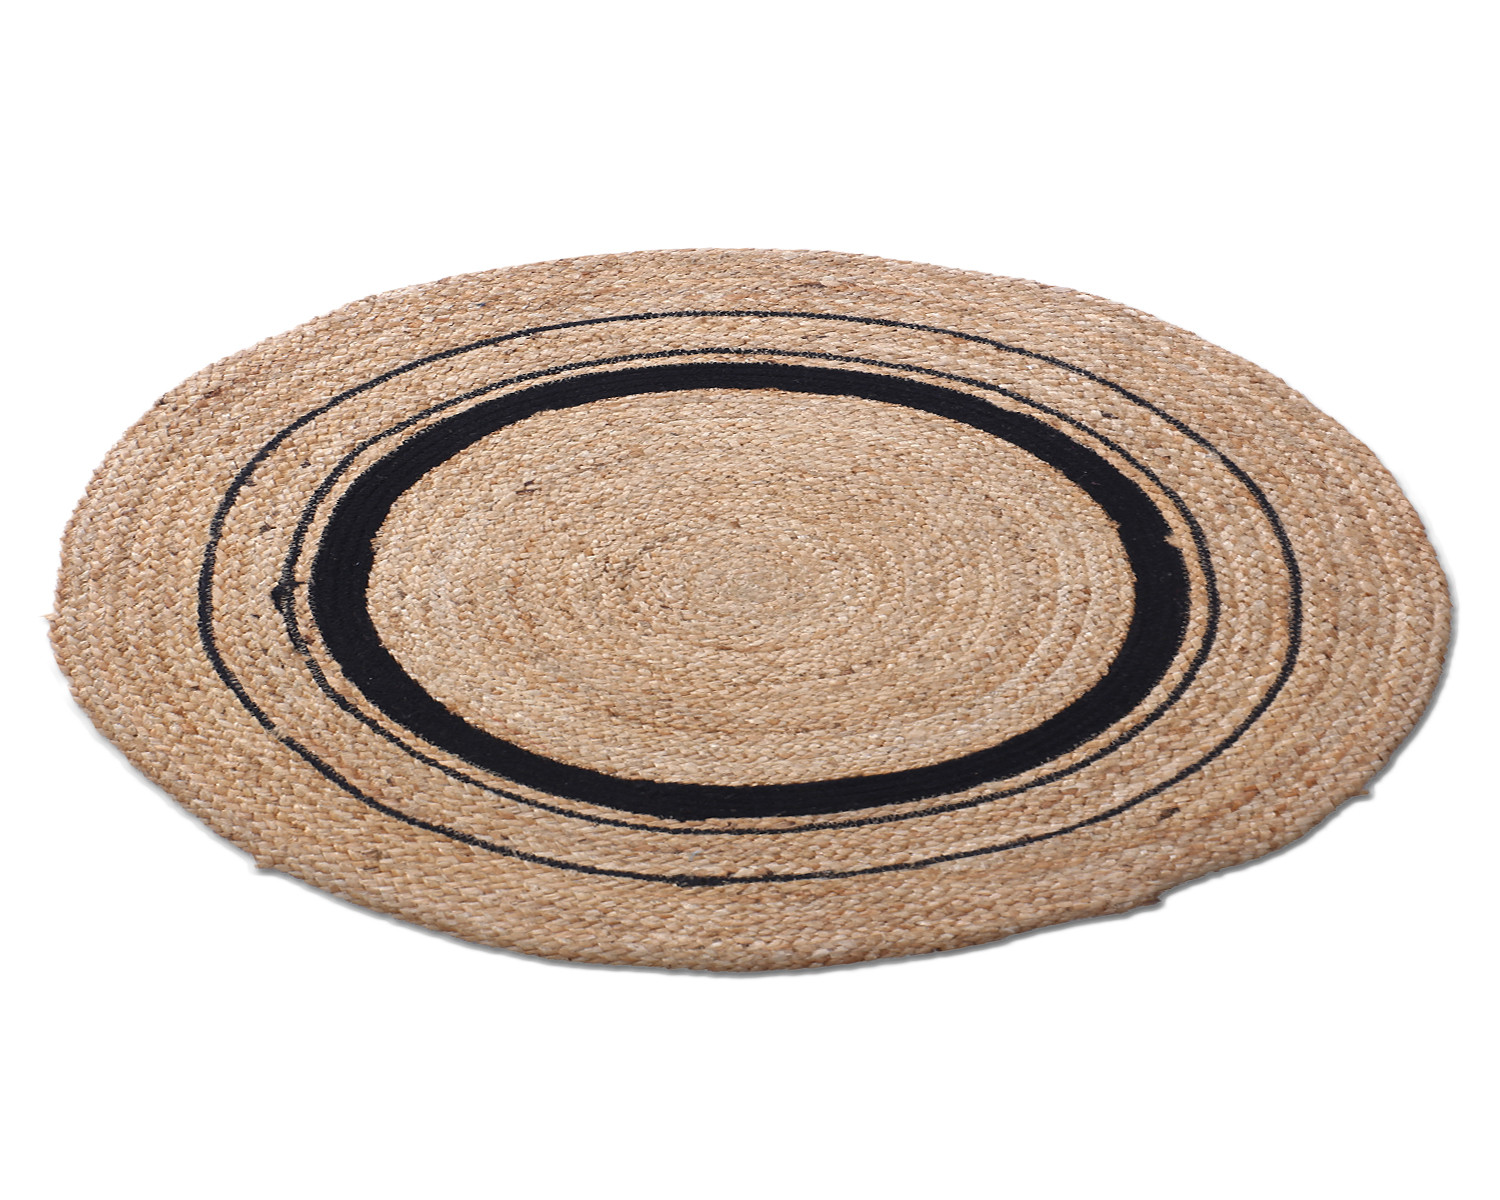 Kuber Industries Handmade Carpet|Cotton Circular Shape Black Layer Door Mat|Jute Floor Rug Mat For Meditation,Living Room,Dining Room & Home Décor,62x62 cm,(Brown)